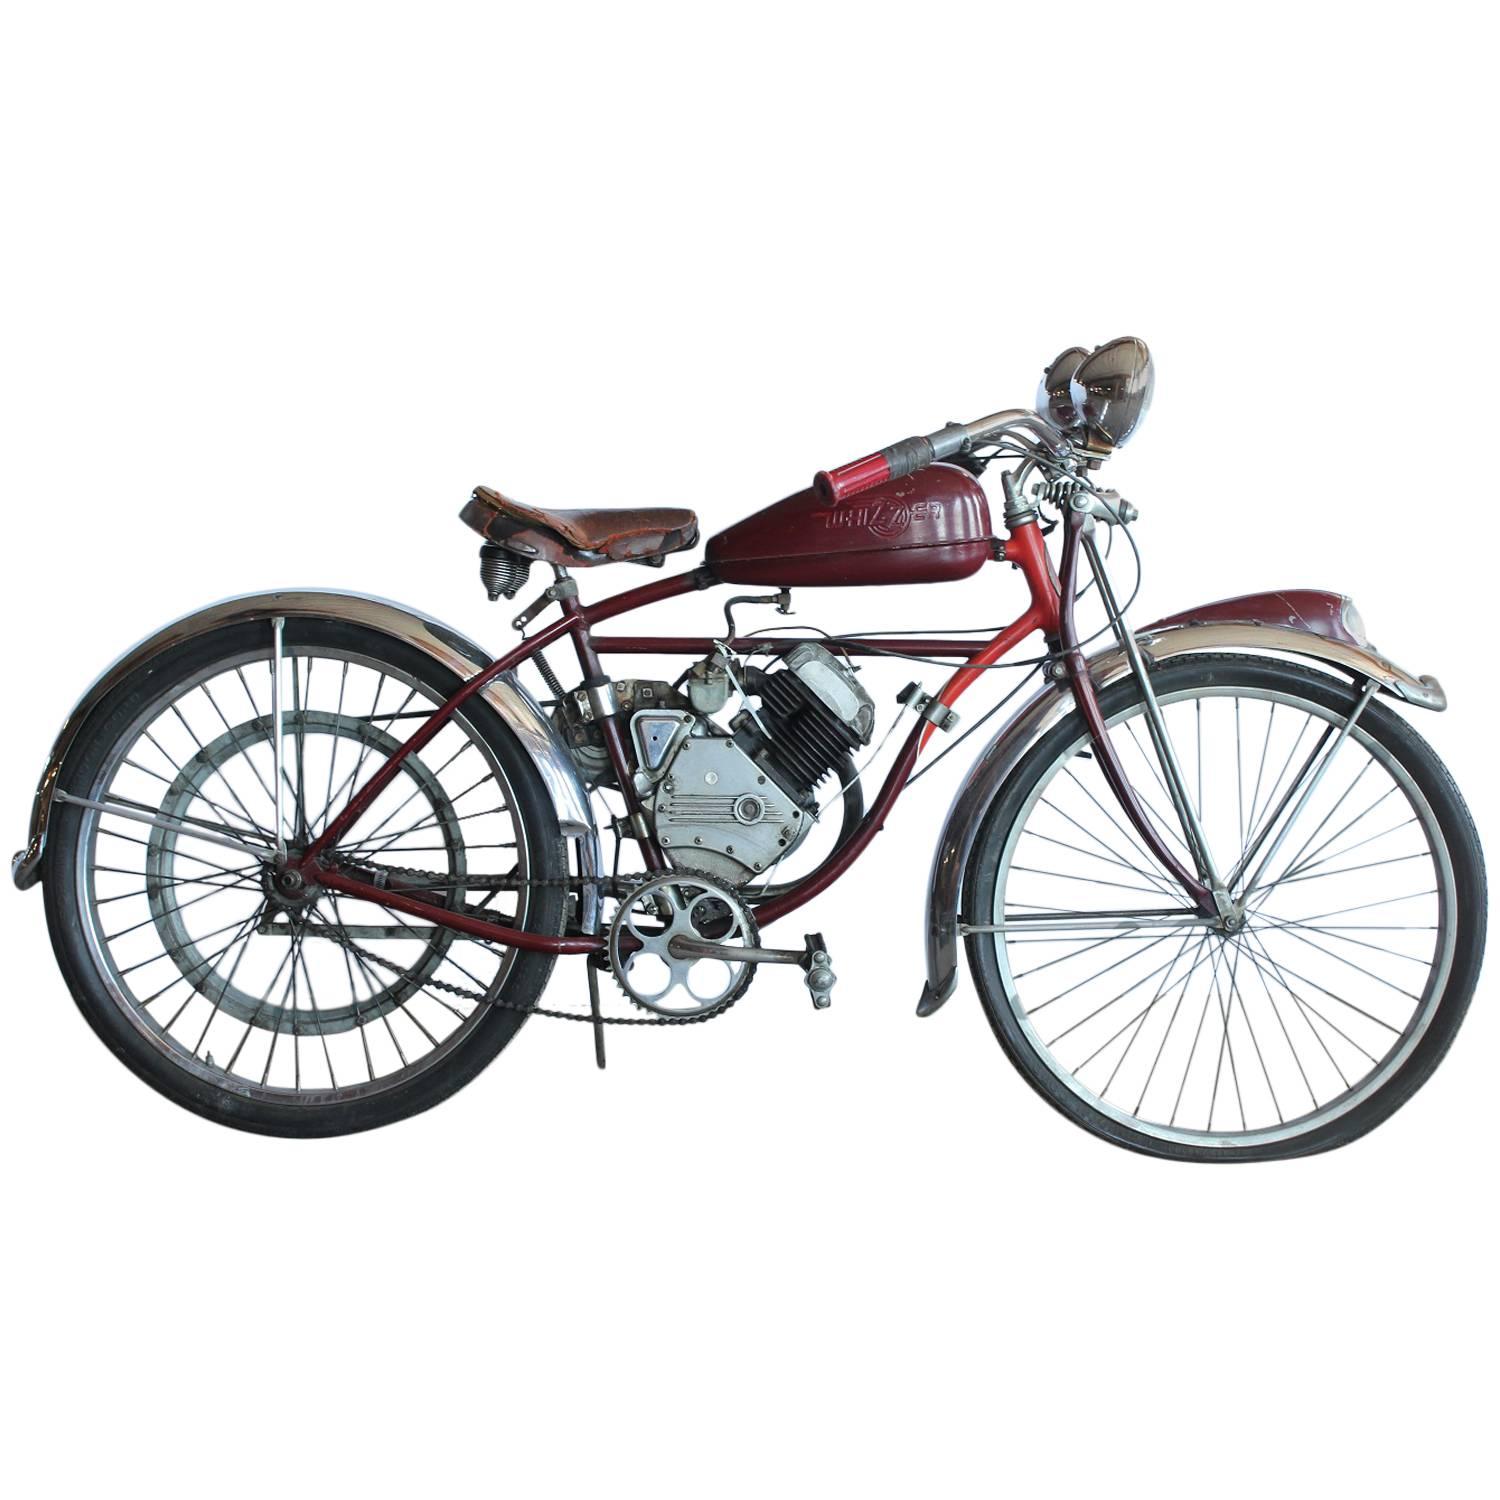 Original 1950s Whizzer Motorbike  For Sale